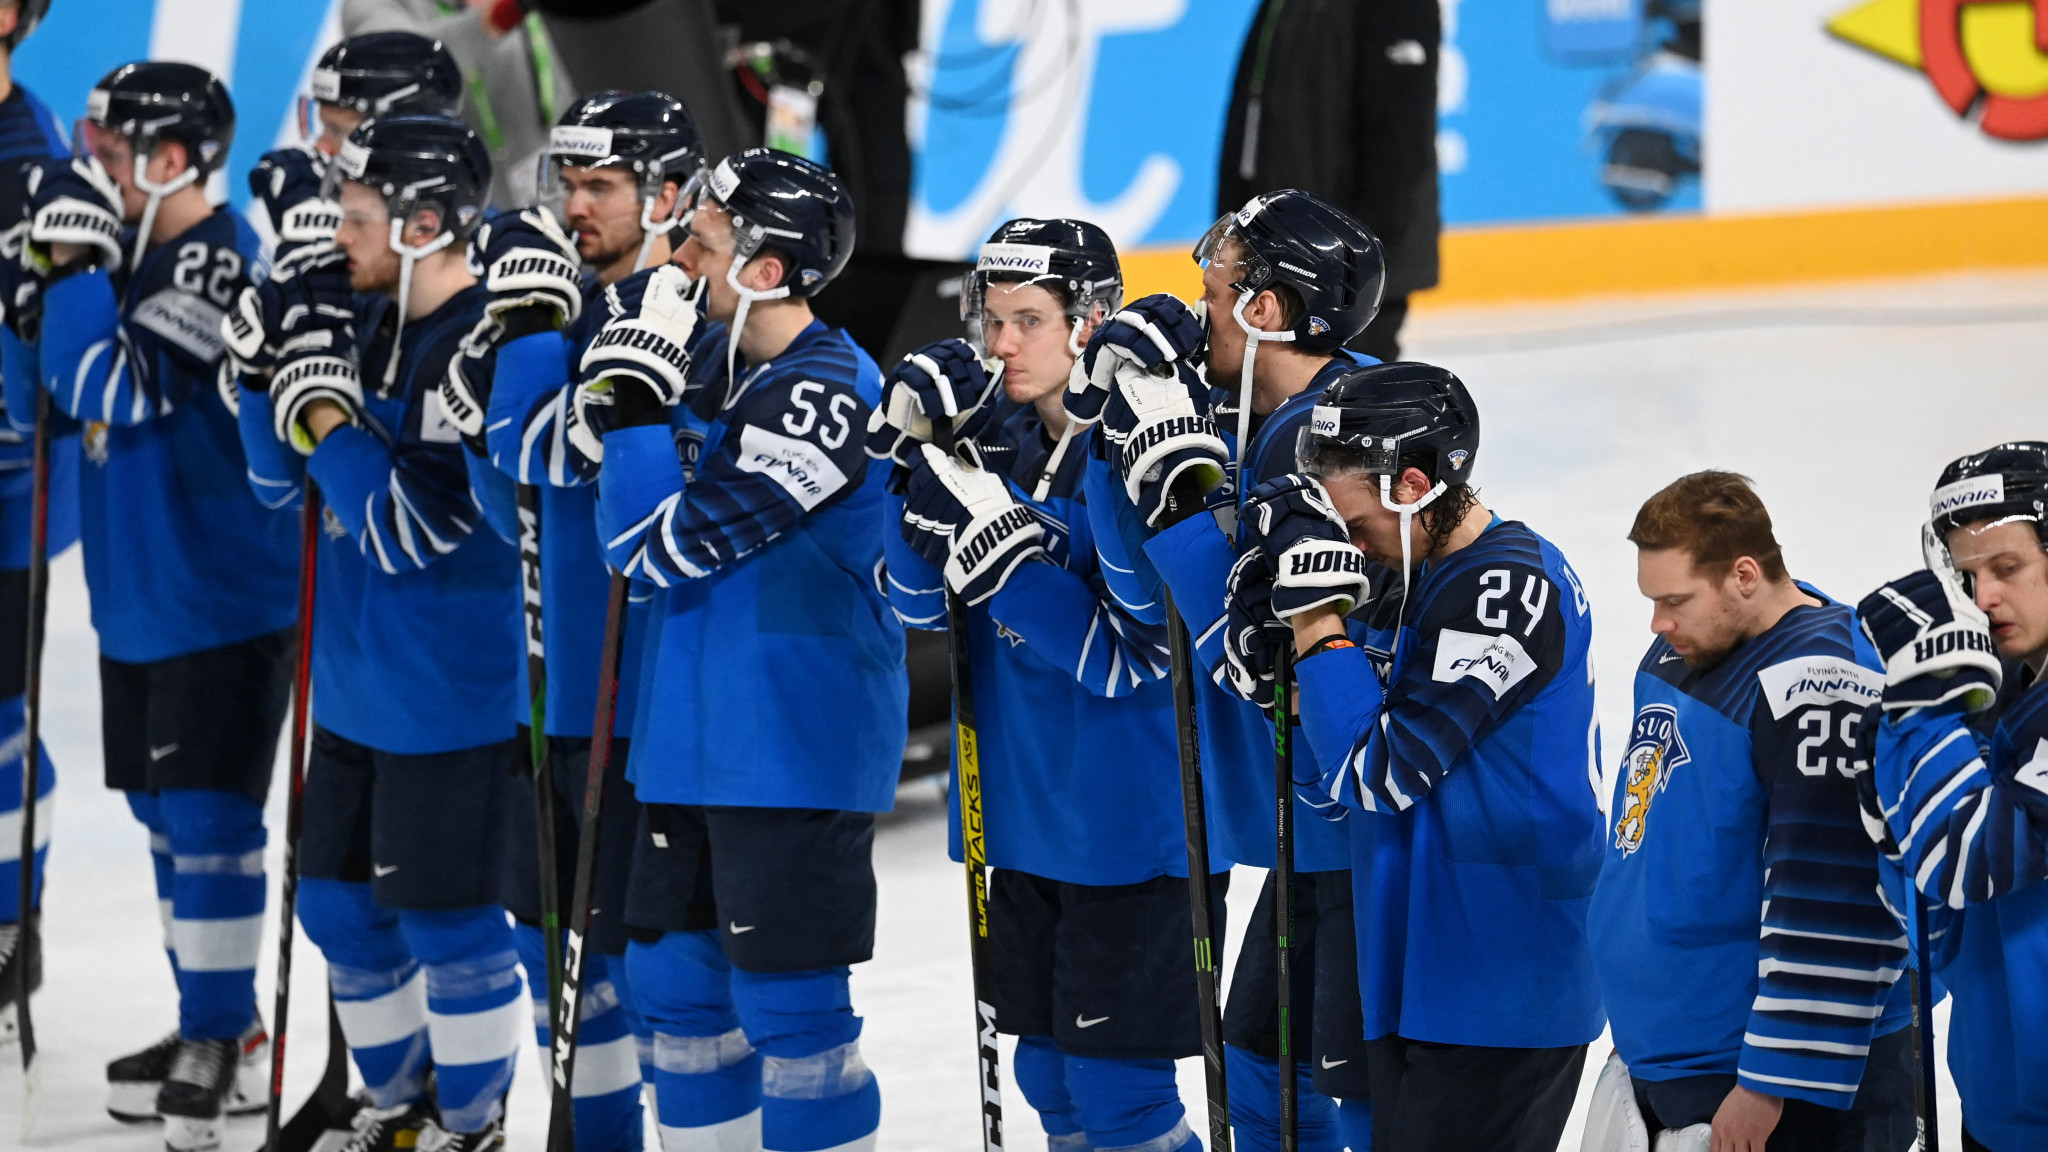 Groups announced for 2022 IIHF Ice Hockey World Championship